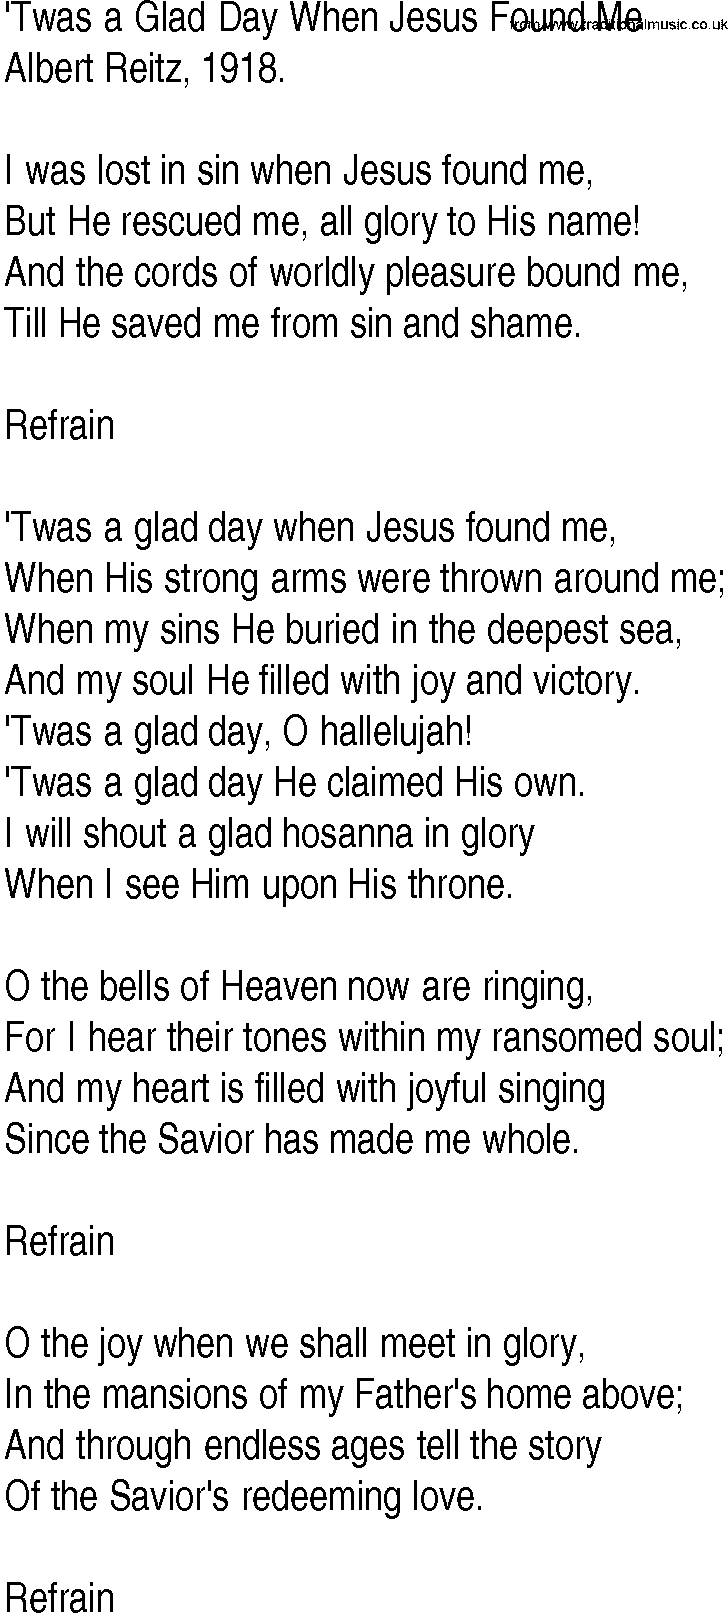 Hymn and Gospel Song: 'Twas a Glad Day When Jesus Found Me by Albert Reitz lyrics